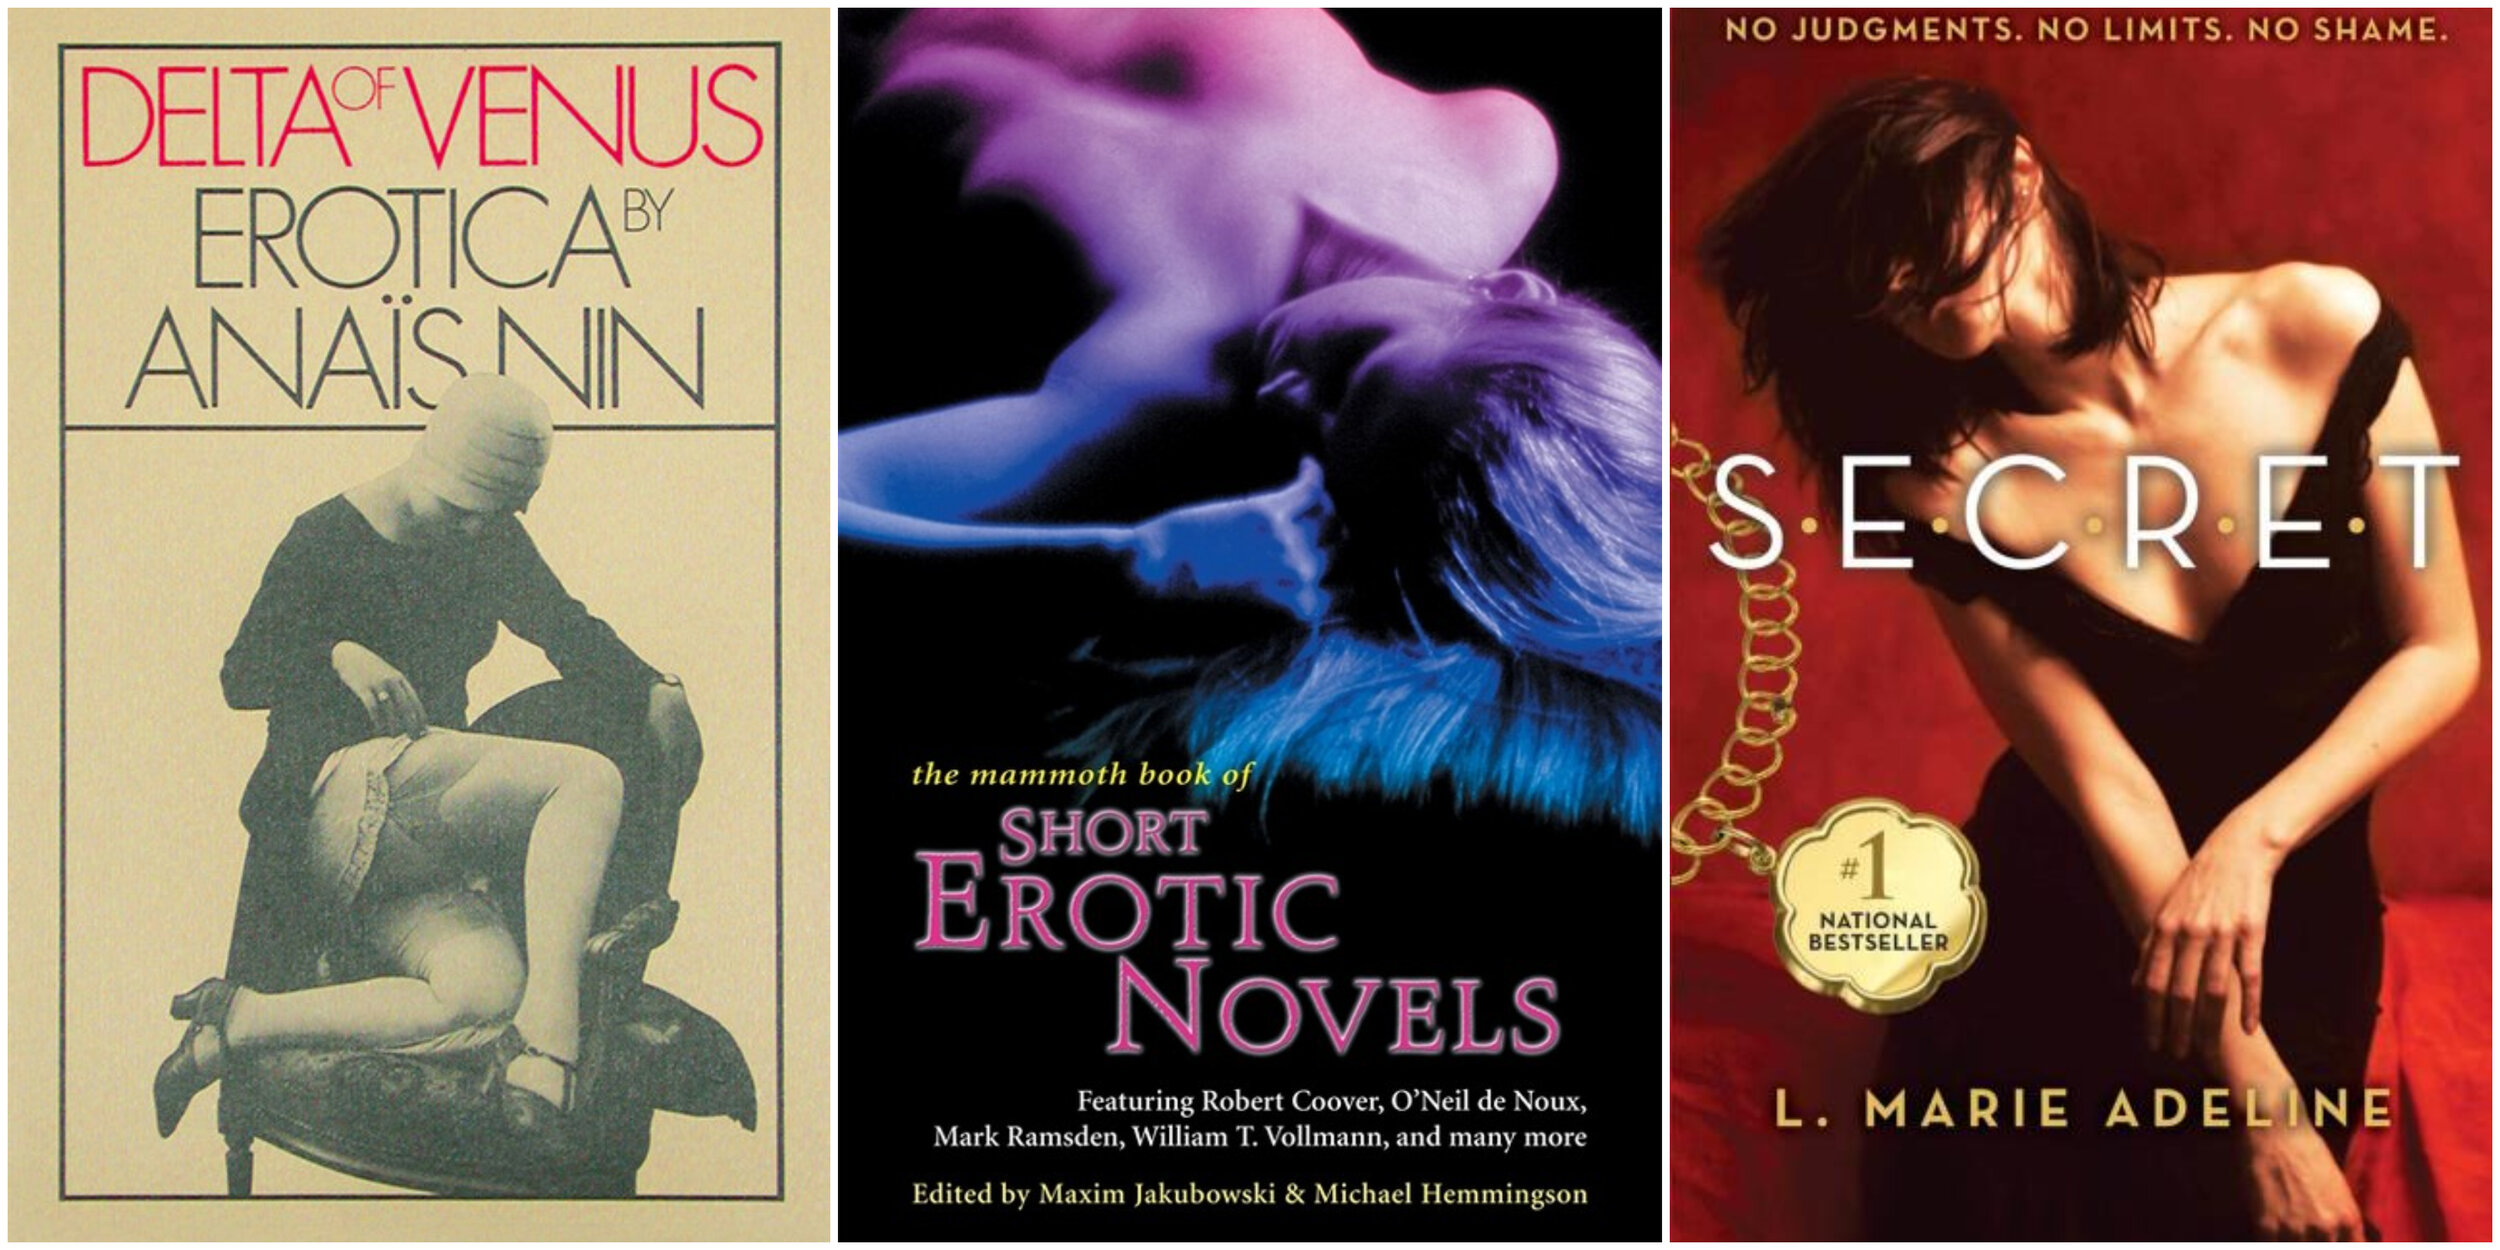 Who wrote the classic erotic novel delta of venus